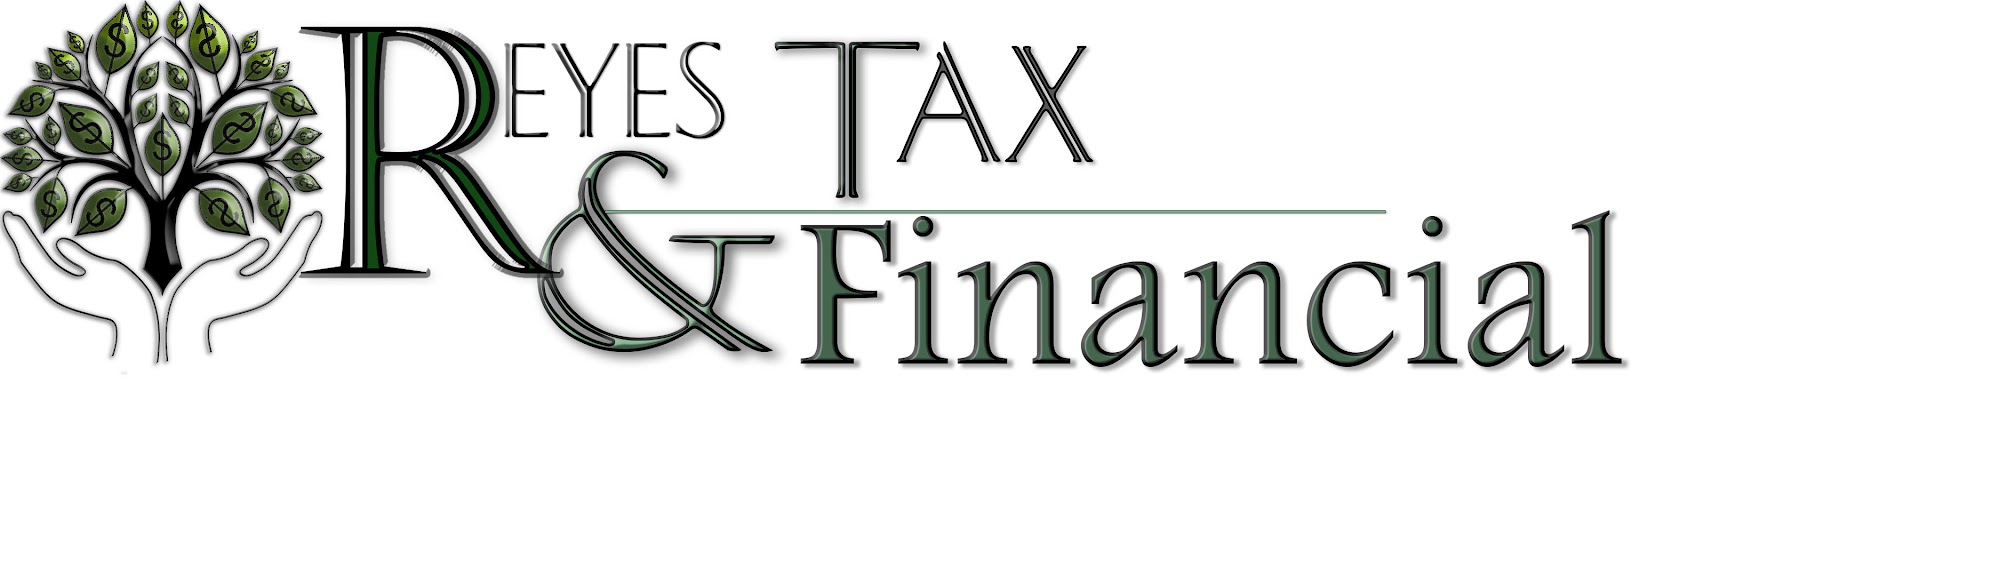 Reyes Tax & Financial